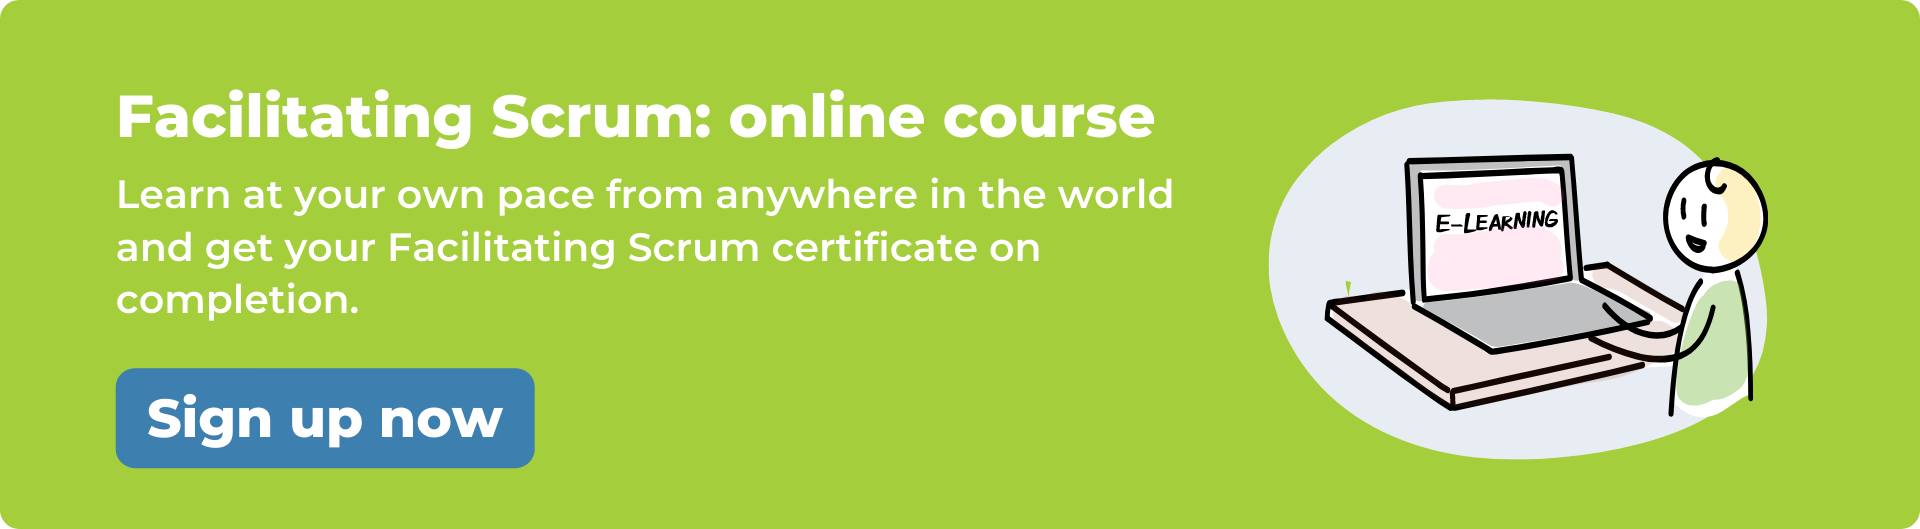 Online Course Facilitating Scrum